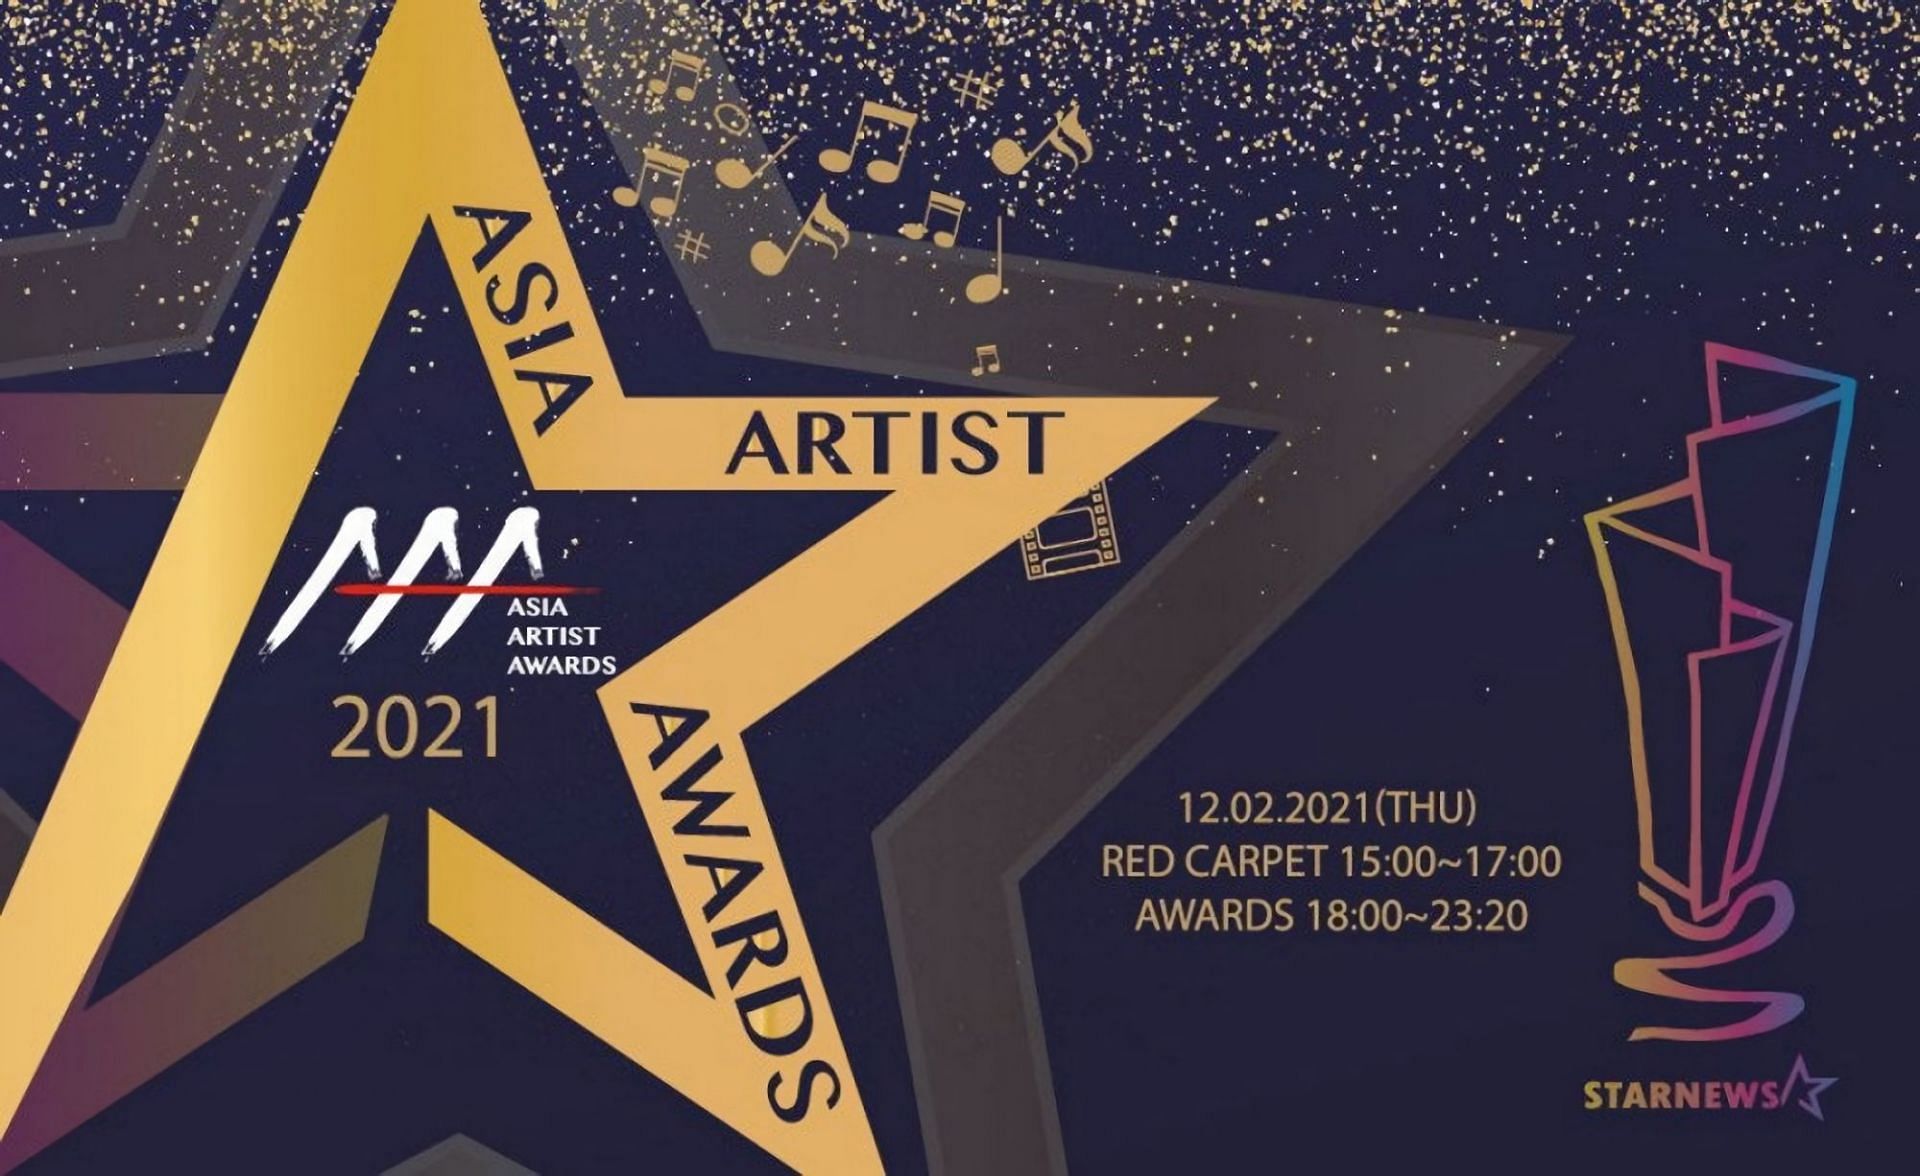 Asia artist awards 2021